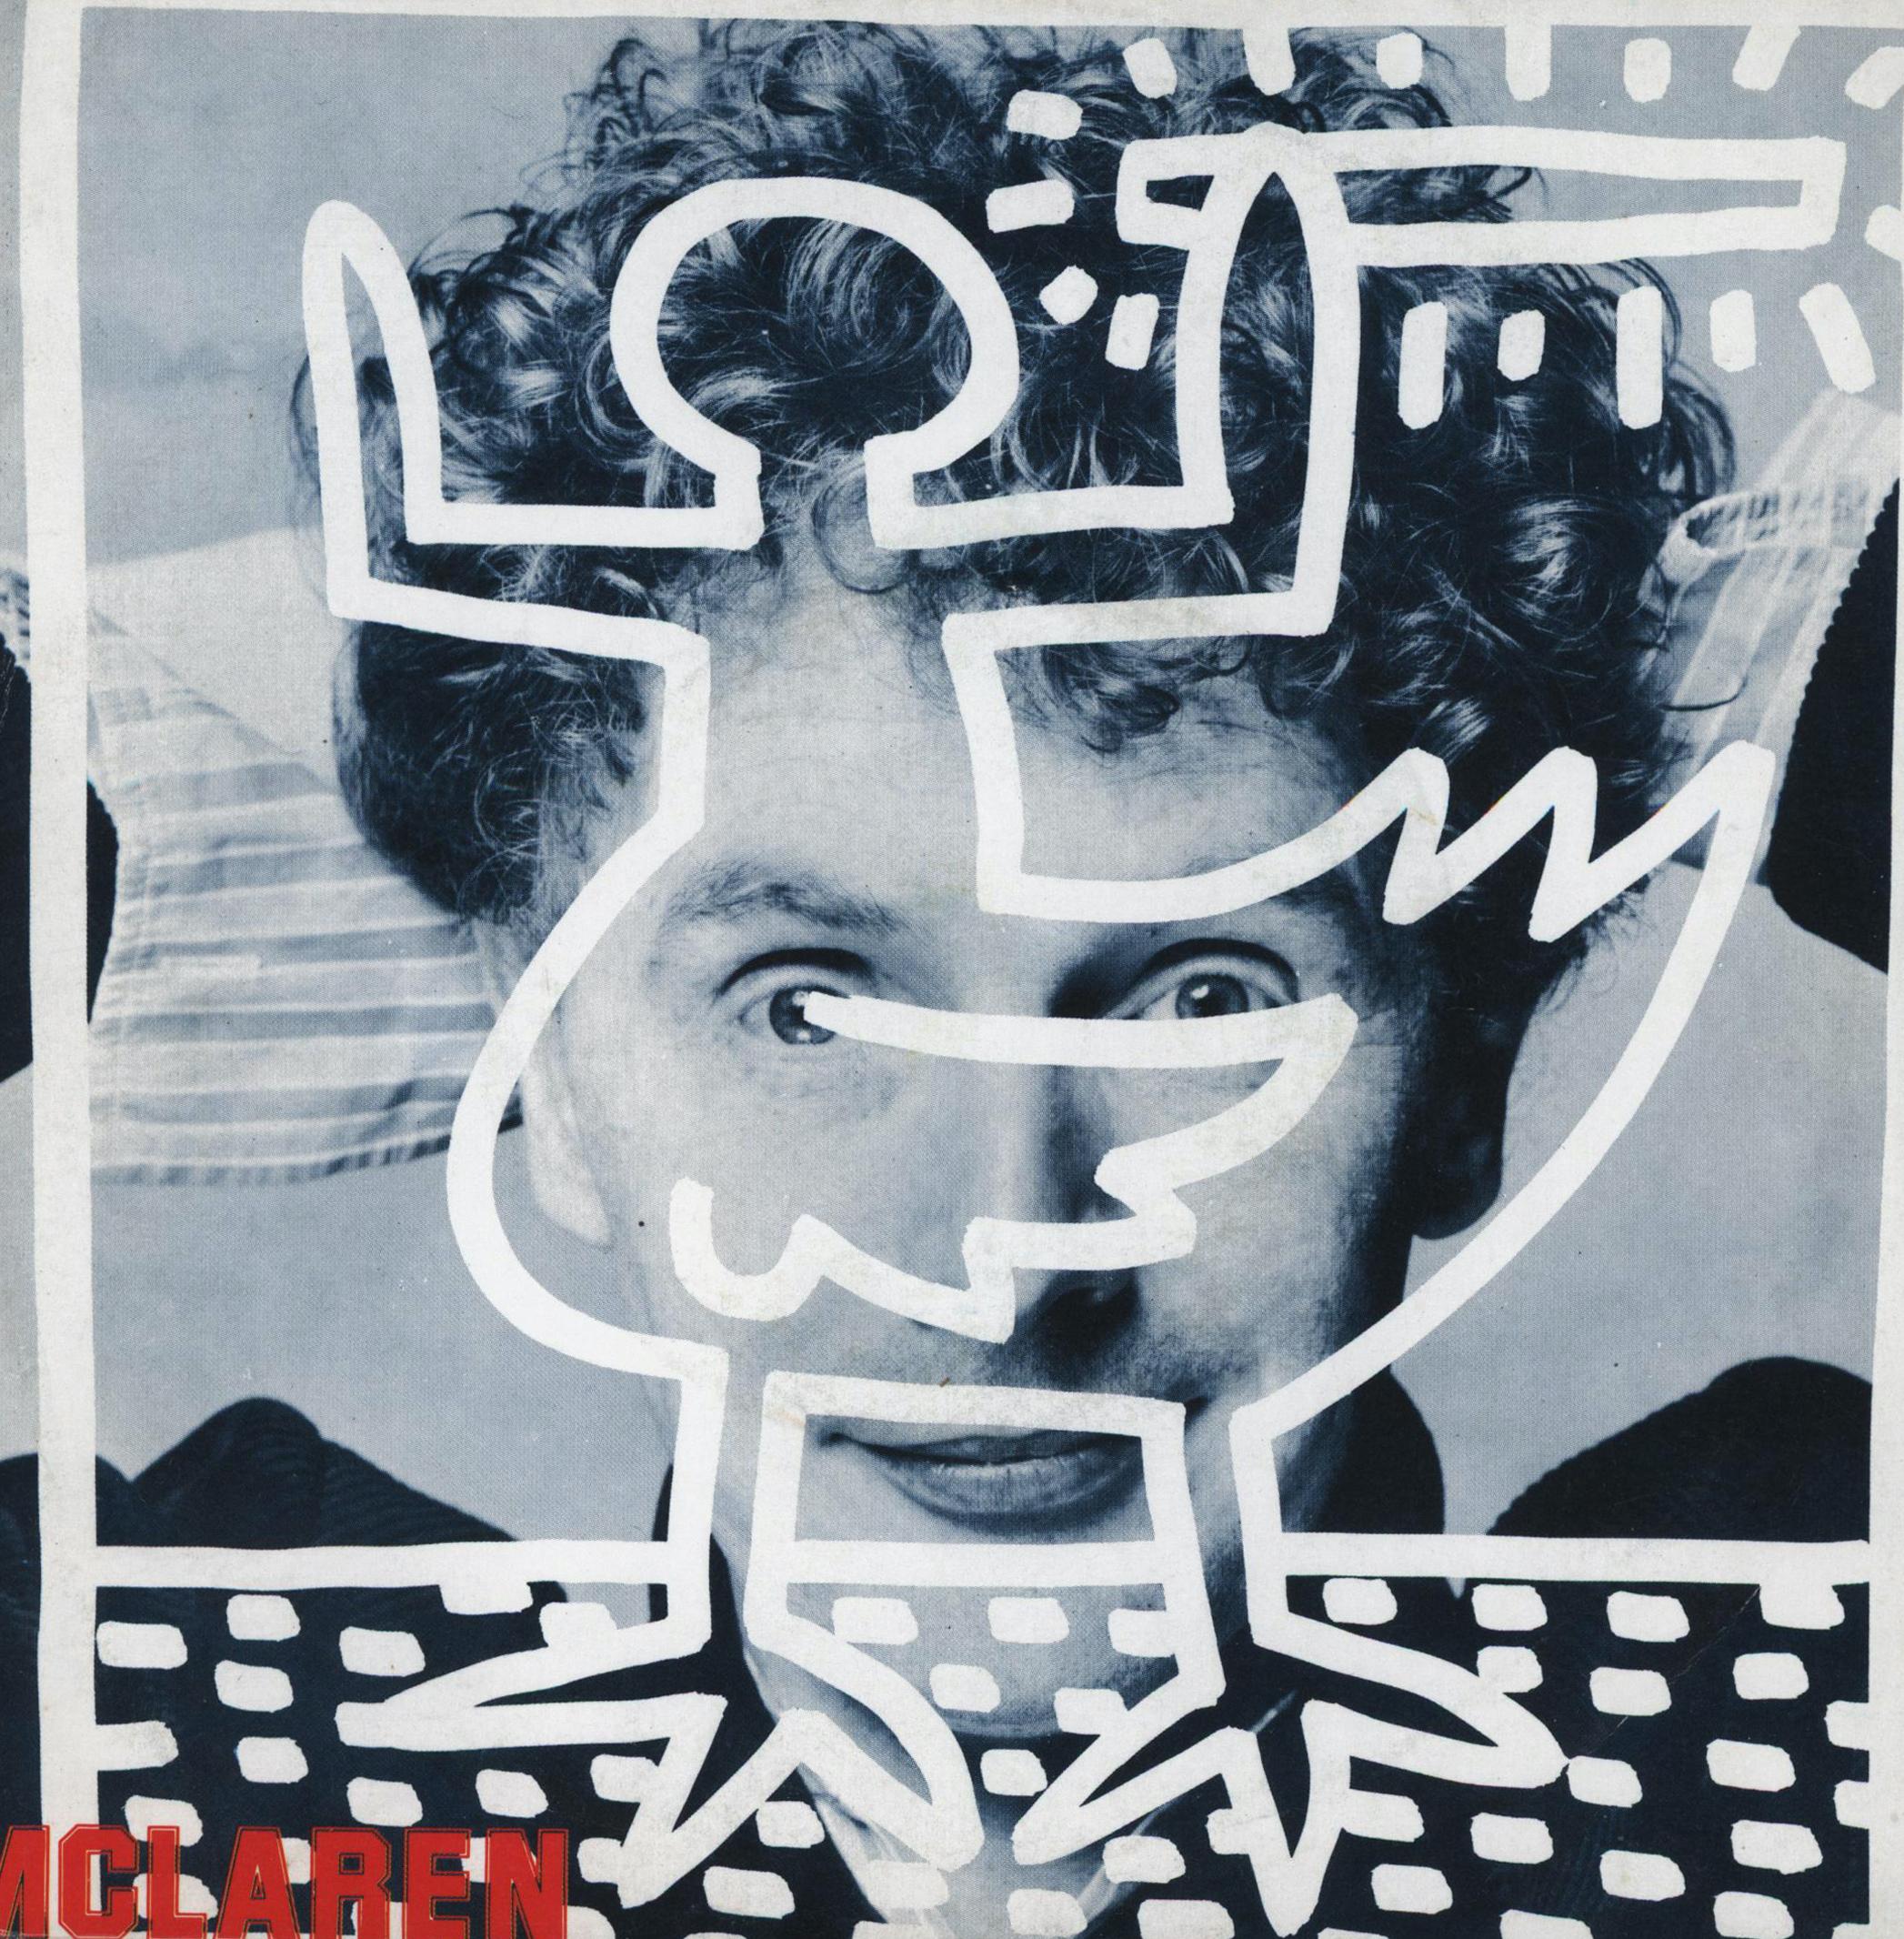 Original Keith Haring Record Art: set of 4  (1980s Keith Haring album cover art) 2